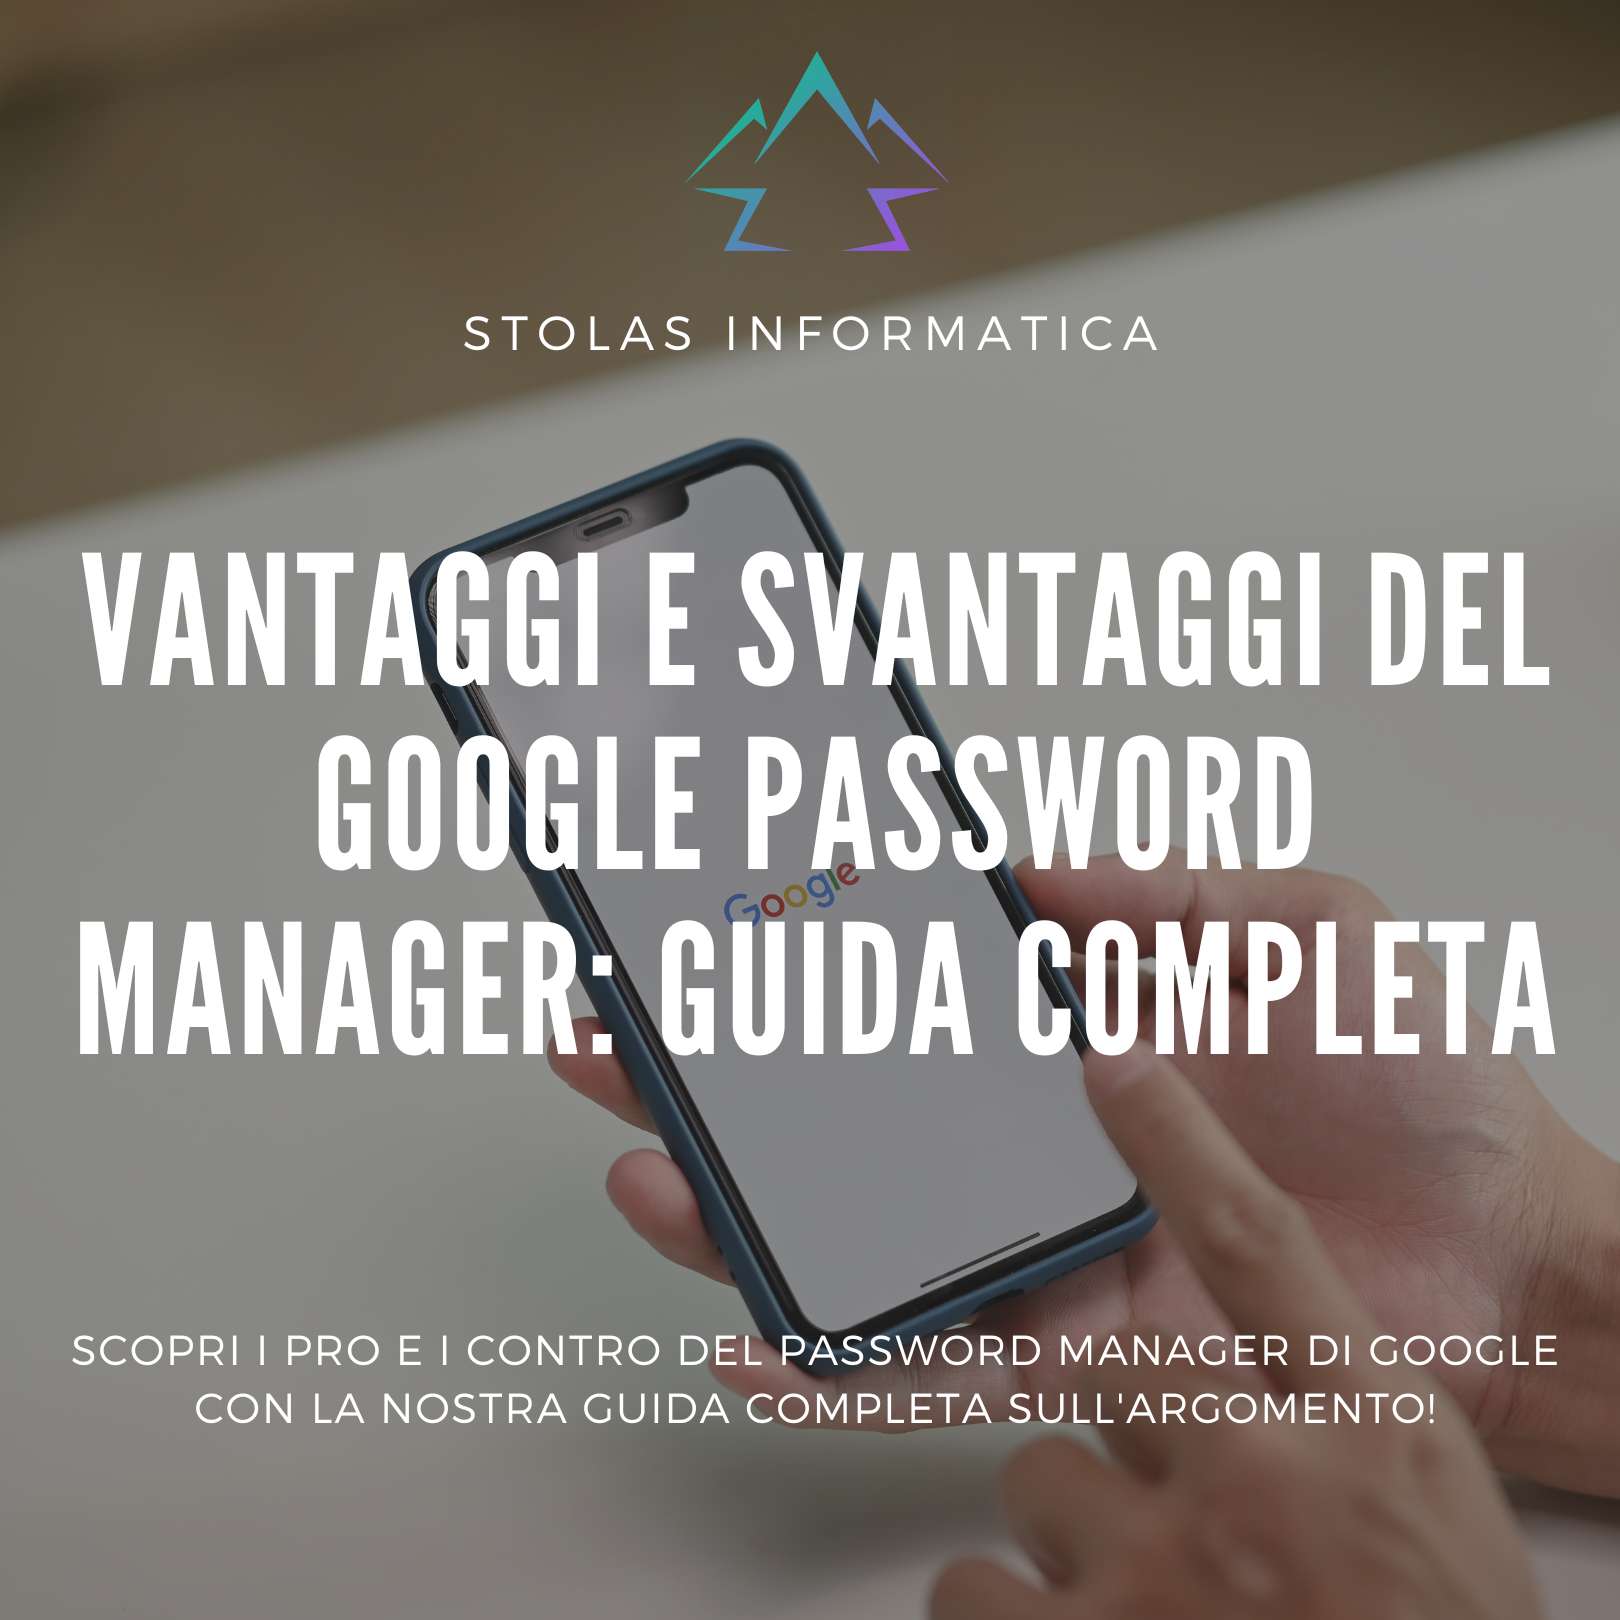 vantaggi svantaggi google password manager guida completa cover